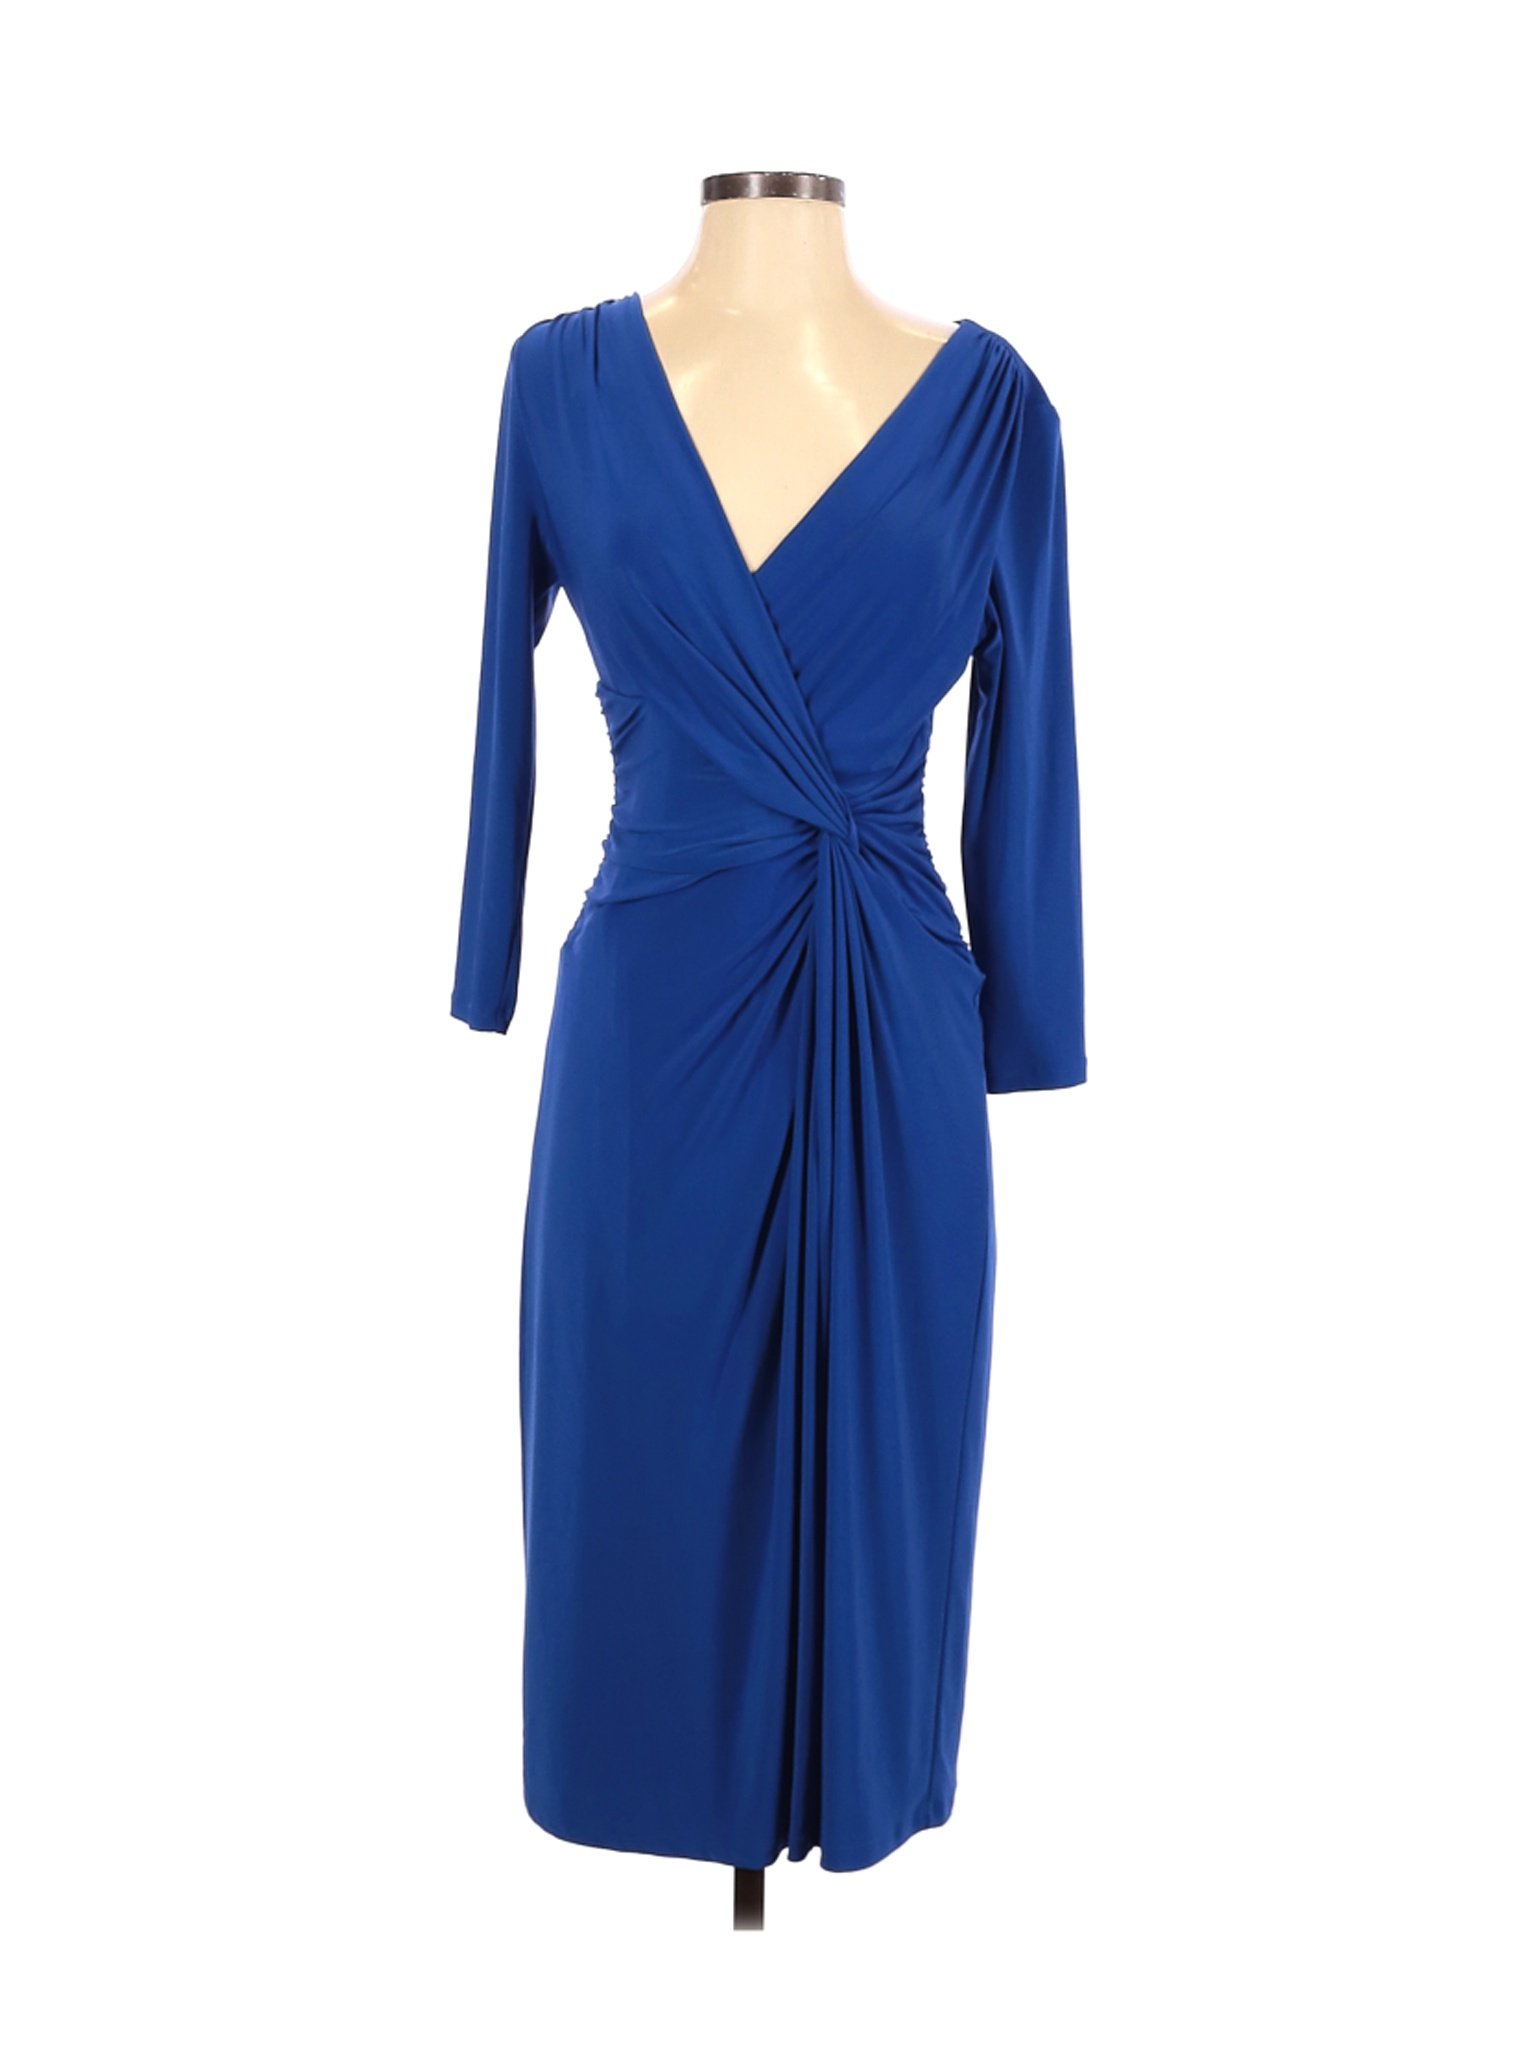 Lauren by Ralph Lauren Women Blue Casual Dress 4 | eBay